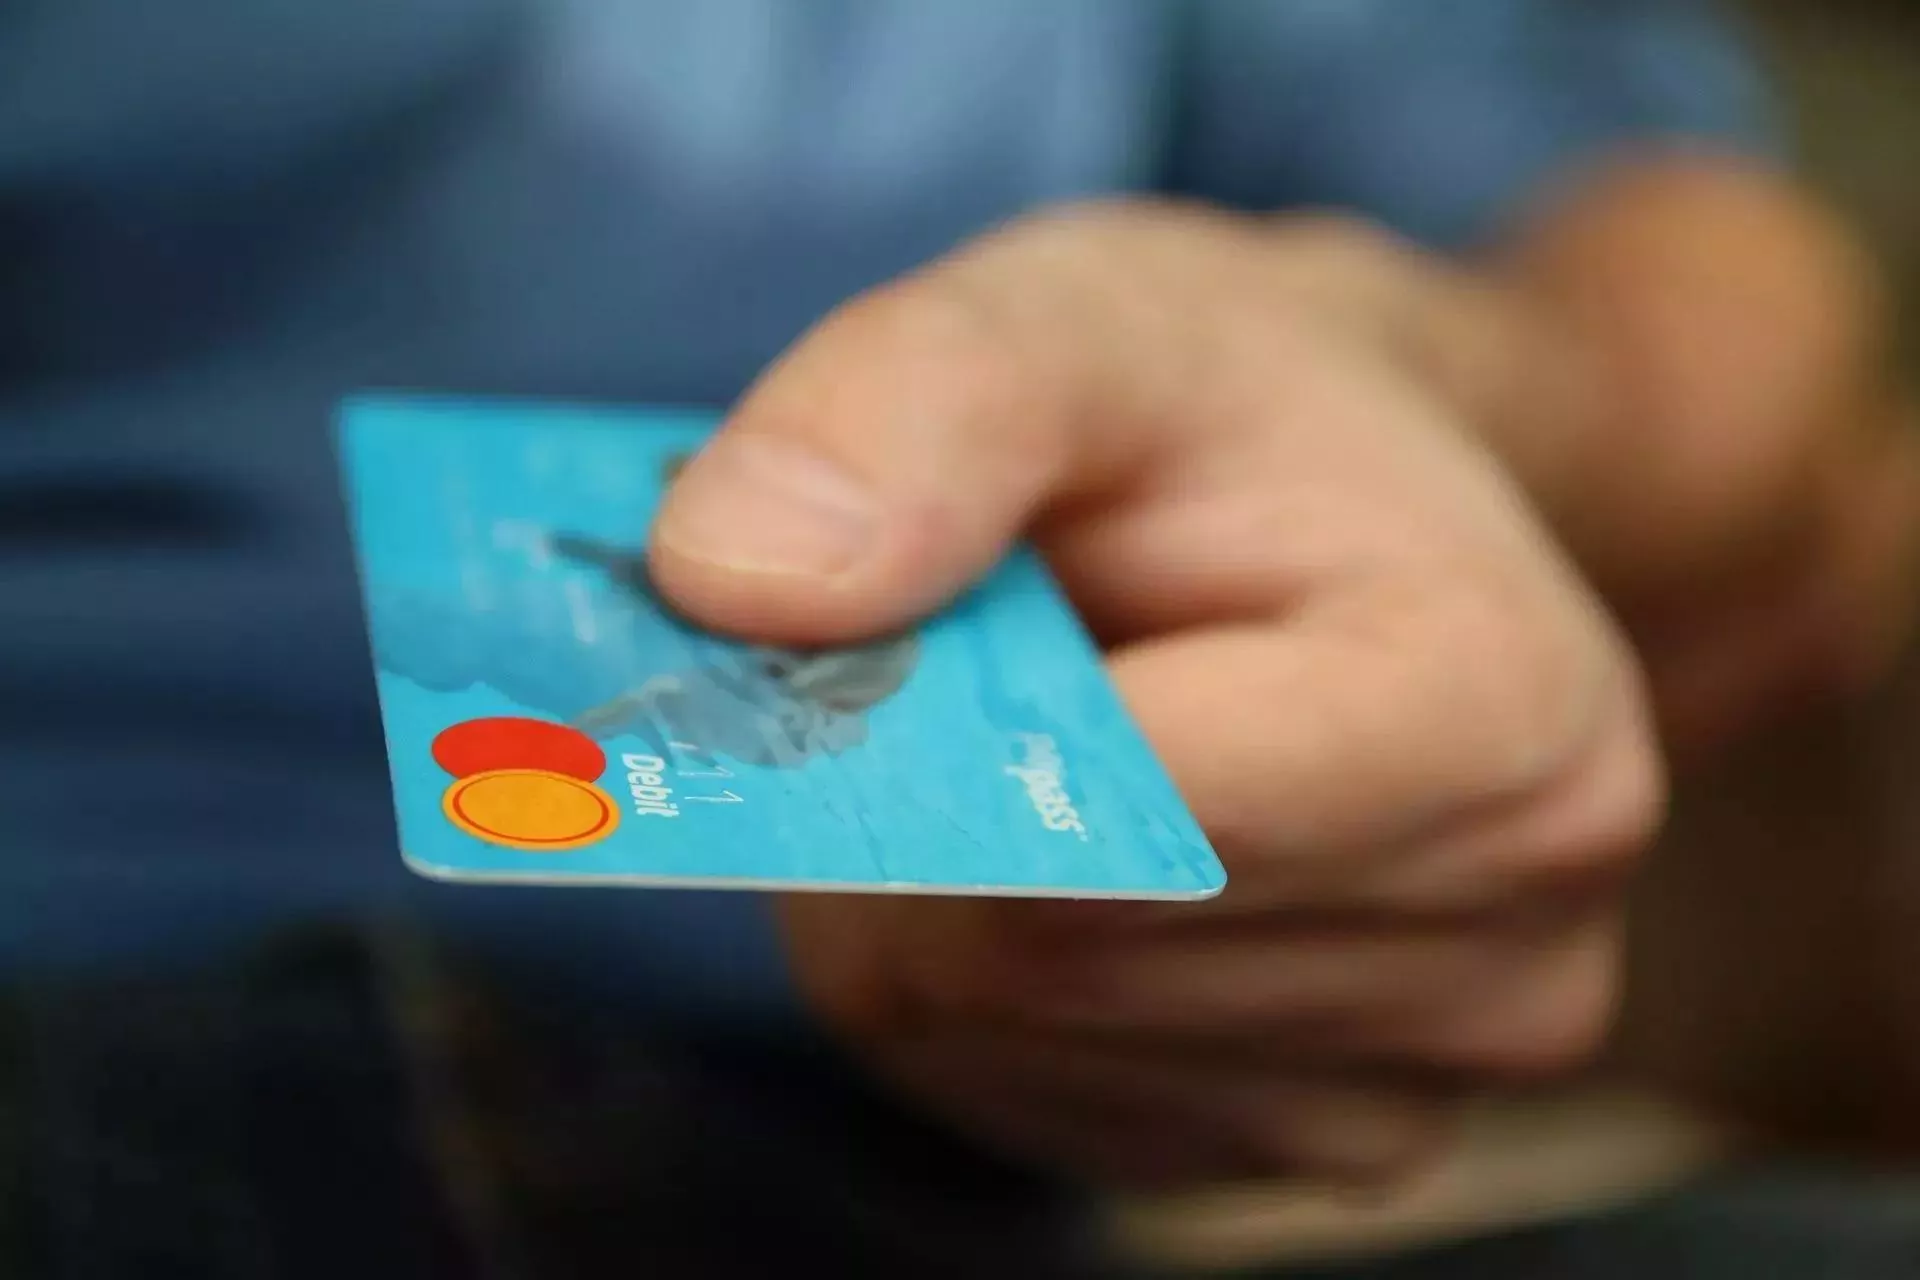 Kreditkarte beim Bezahlvorgang